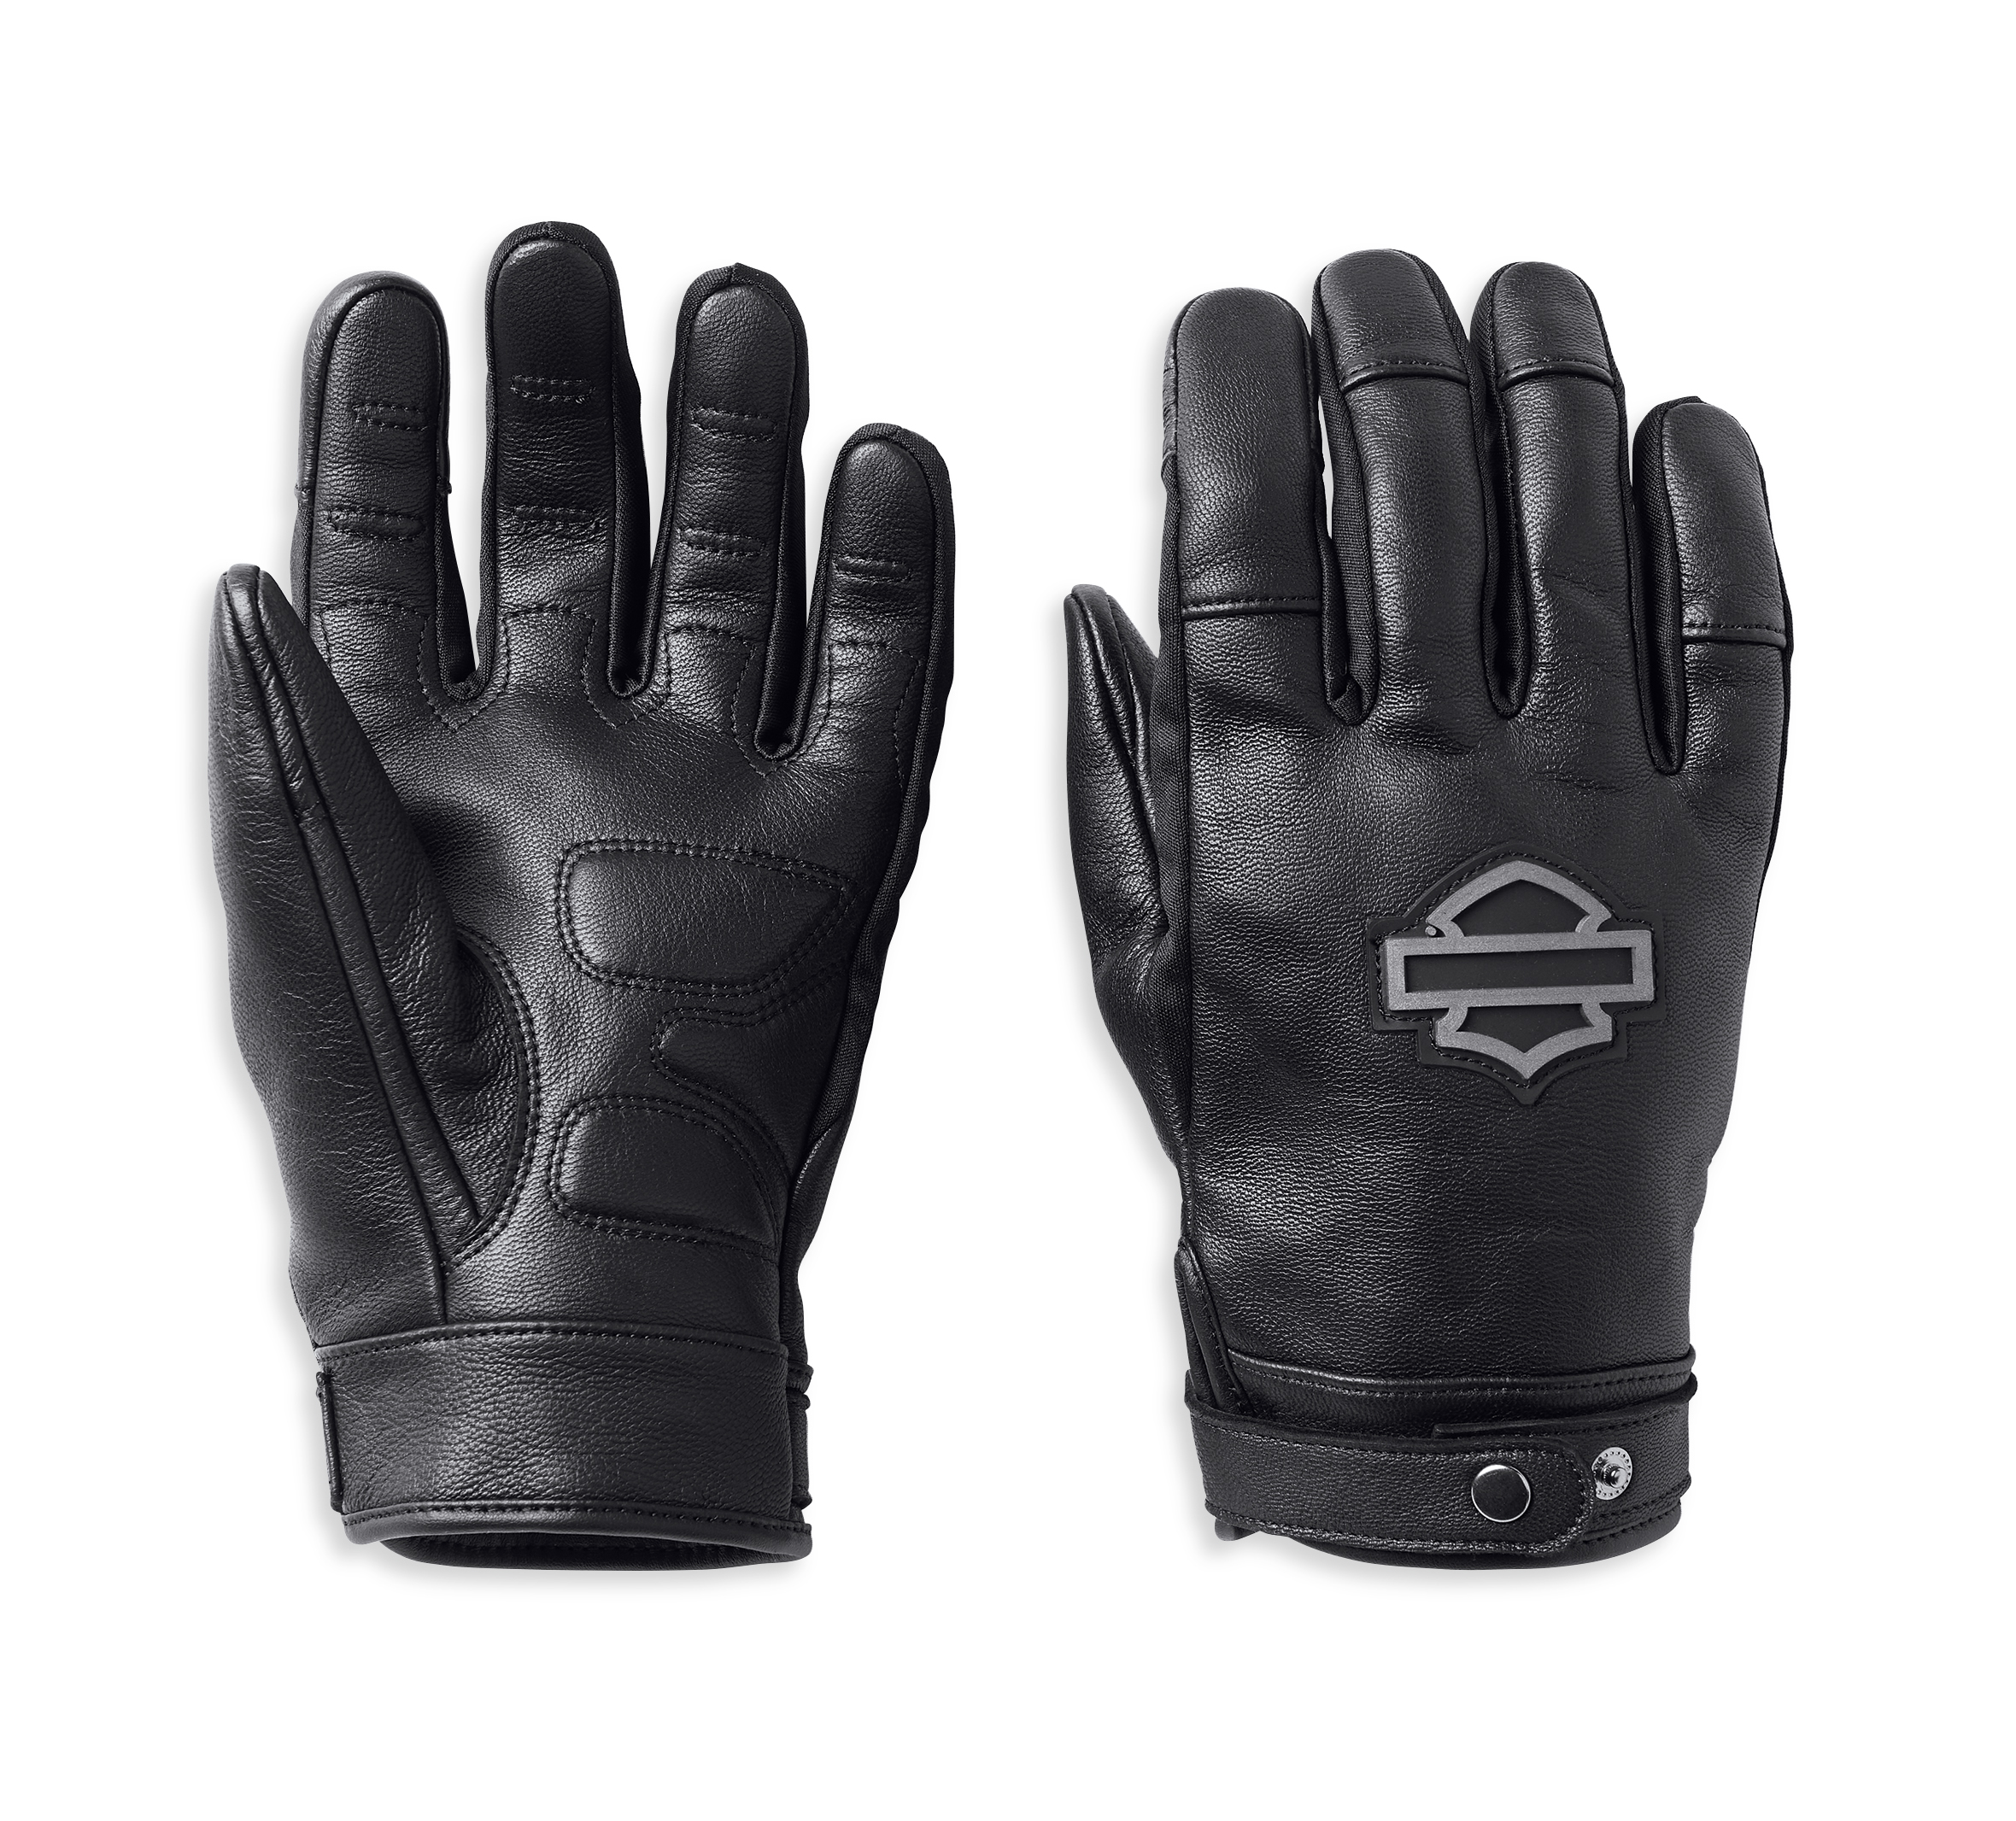 Details about   Men's Hard Knuckle Touchscreen Motocross Motorcycle Motorbike Full Finger Gloves 